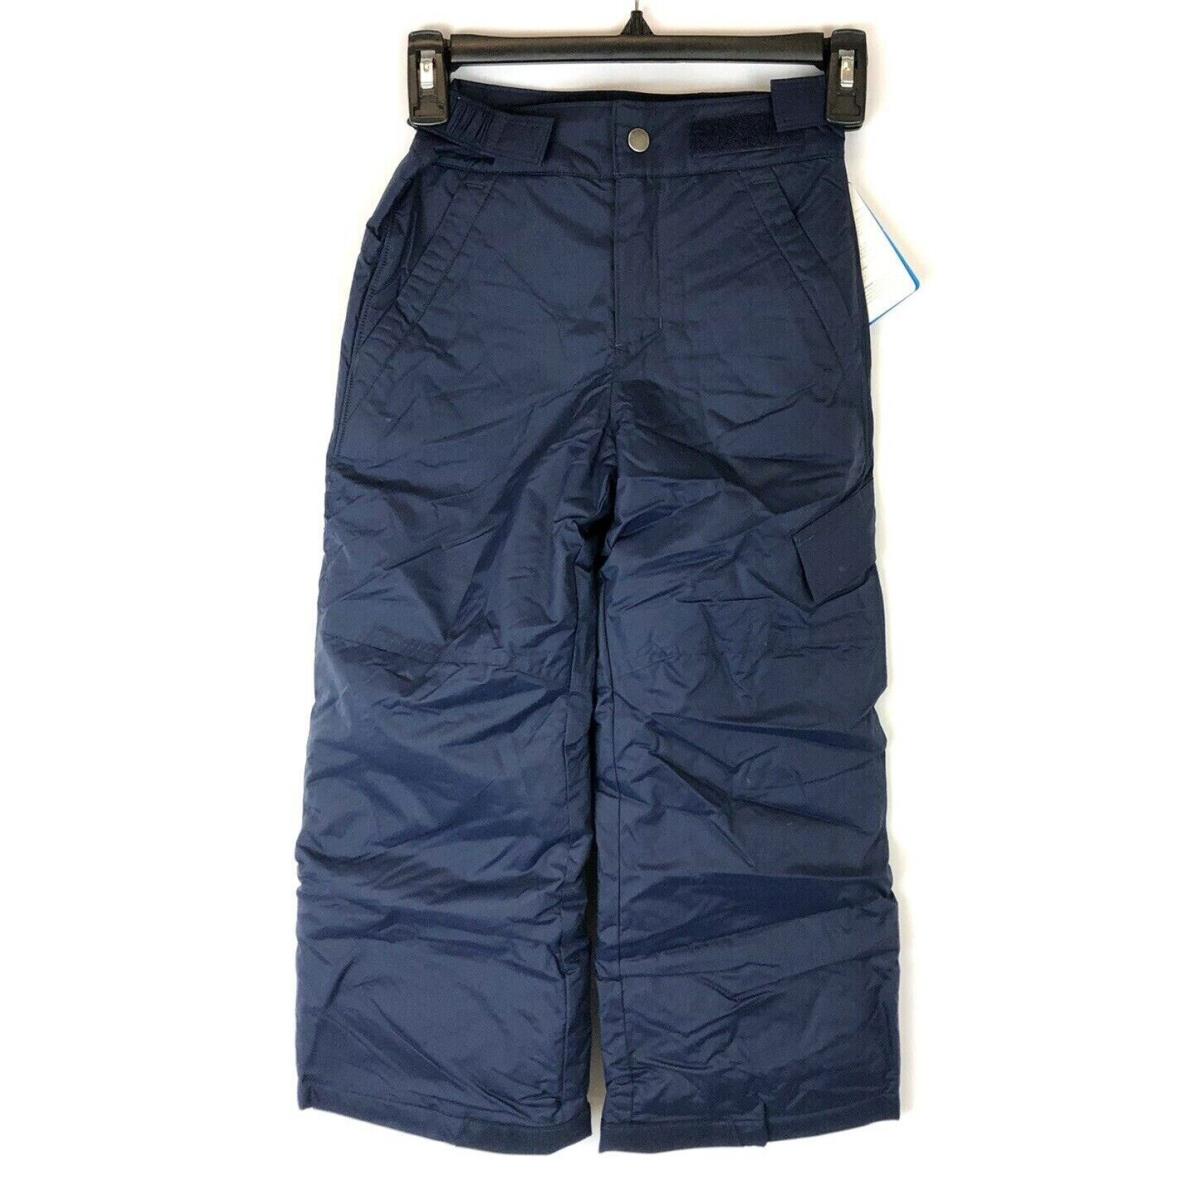 Columbia Youth Boy s Ice Slope II Navy Blue Activewear Pants Size XS